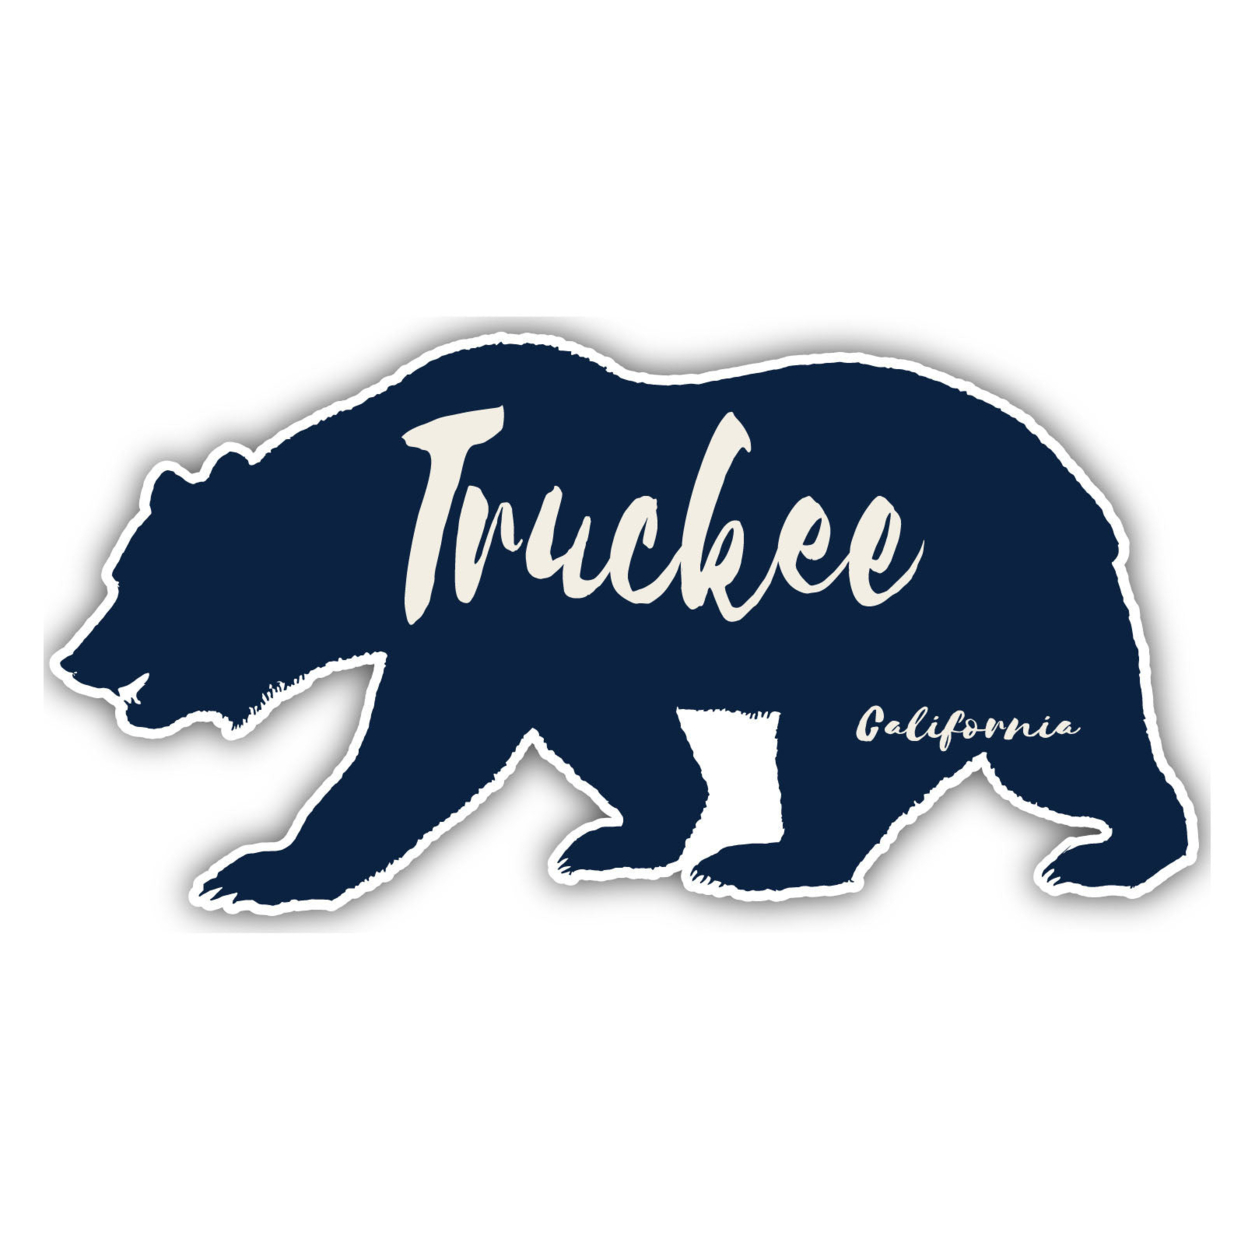 Truckee California Souvenir Decorative Stickers (Choose Theme And Size) - Single Unit, 2-Inch, Bear